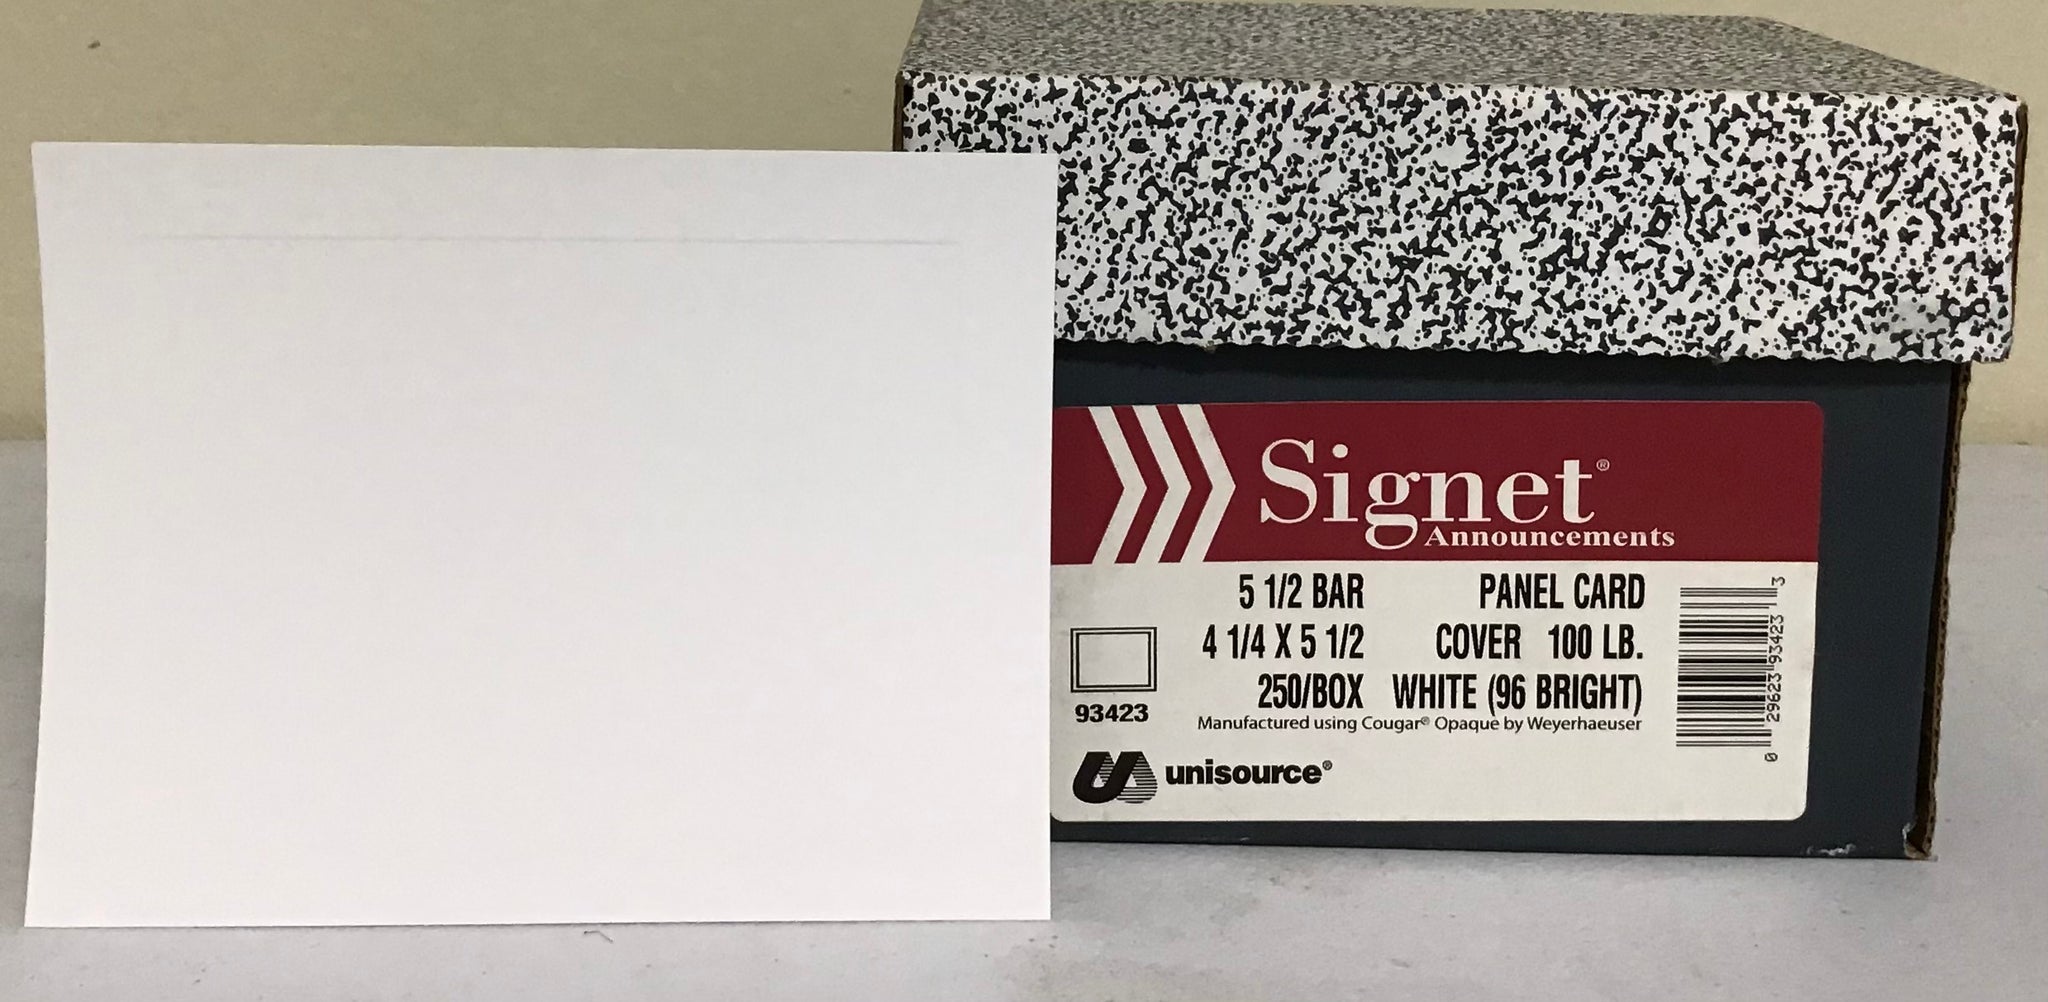 Signet Announcements 5 1/2 Bar 4 1/4 x 5 1/2 Panel Card White